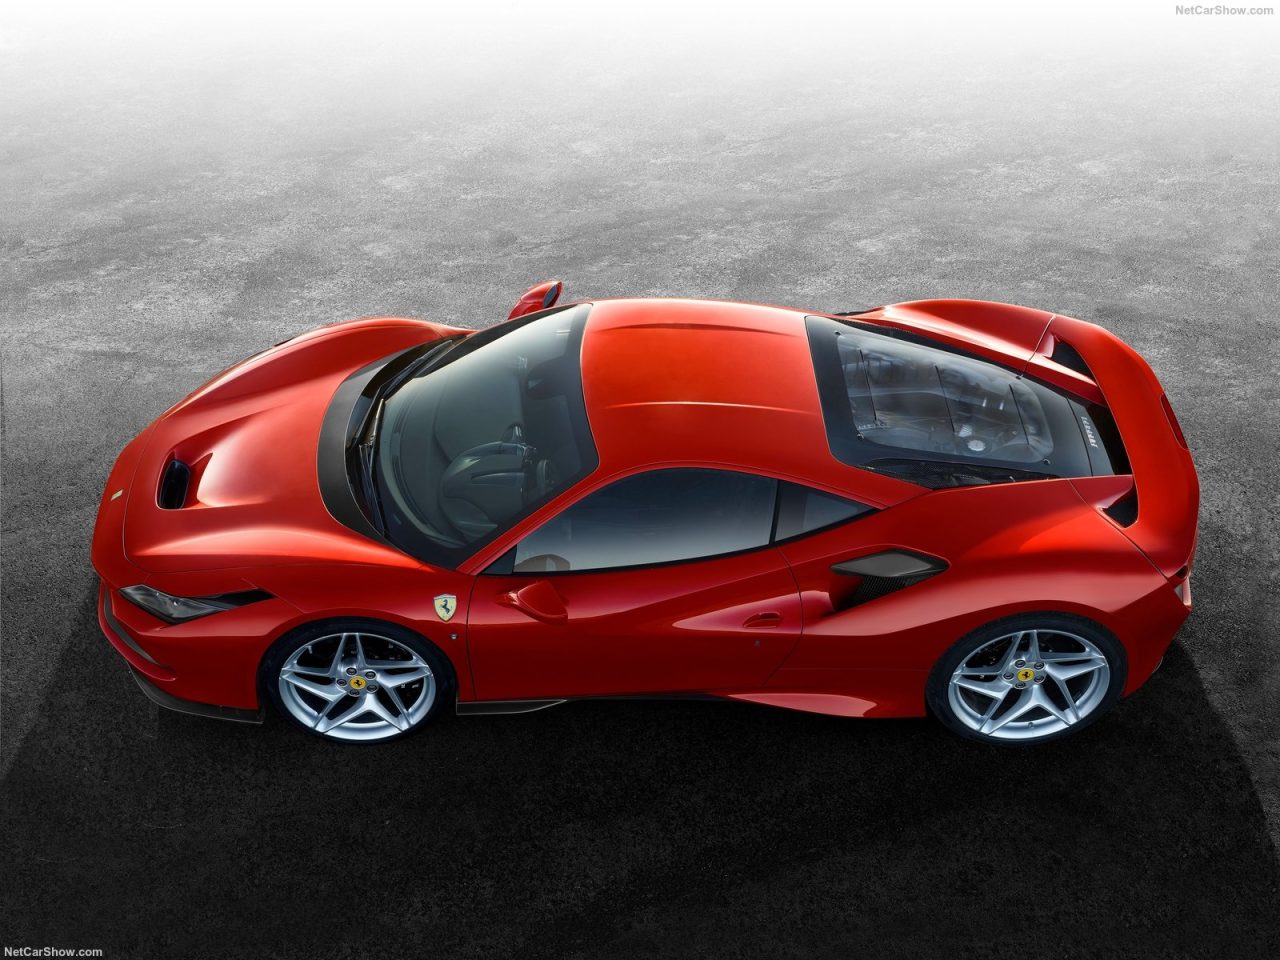 Ferrari-F8_Tributo-2020-1600-02